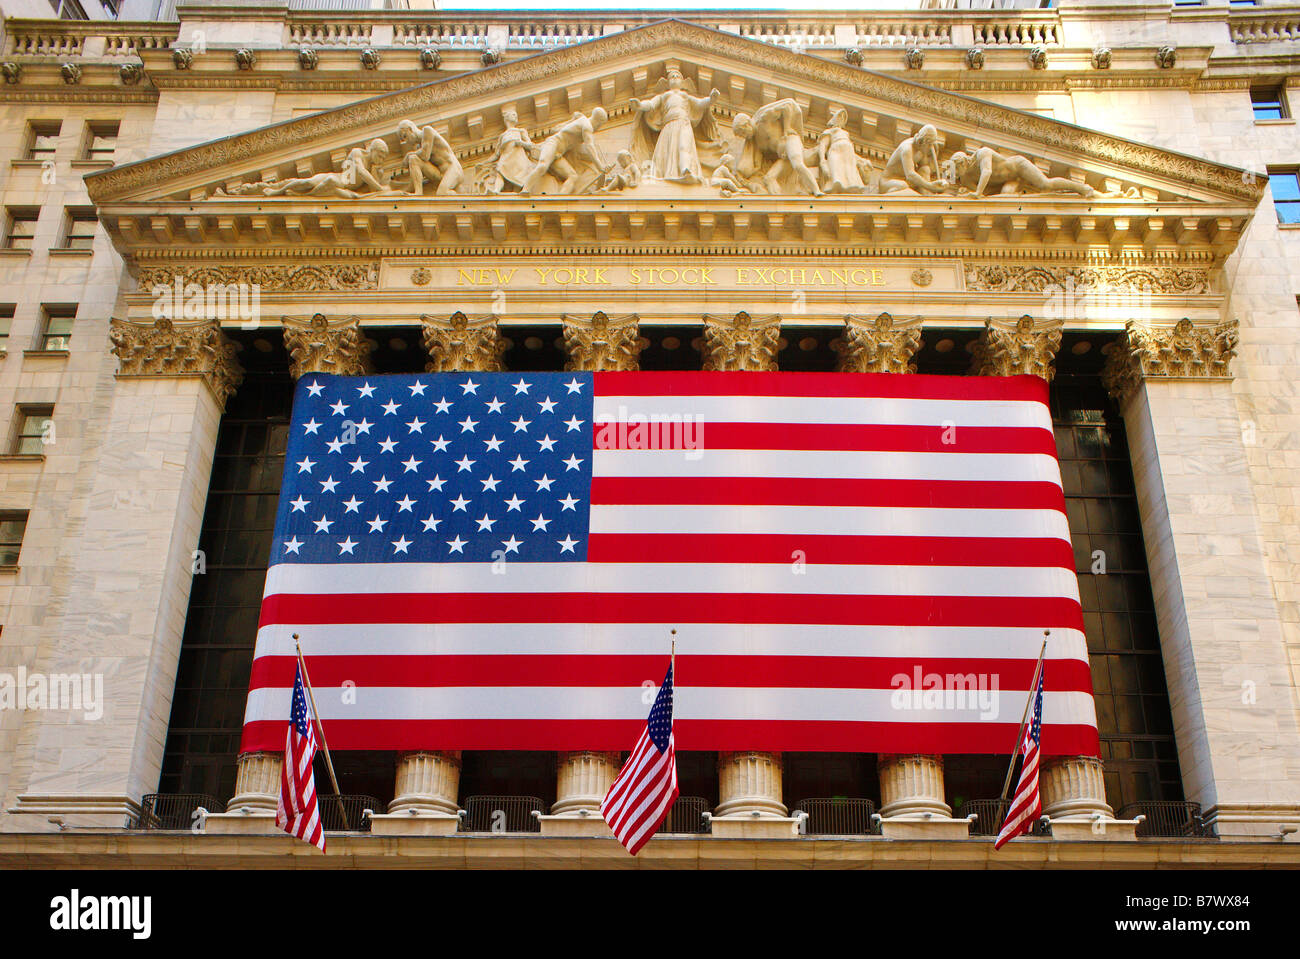 Stars & Stripes USA flag banner across frontage of New York Stock Exchange Stock Photo